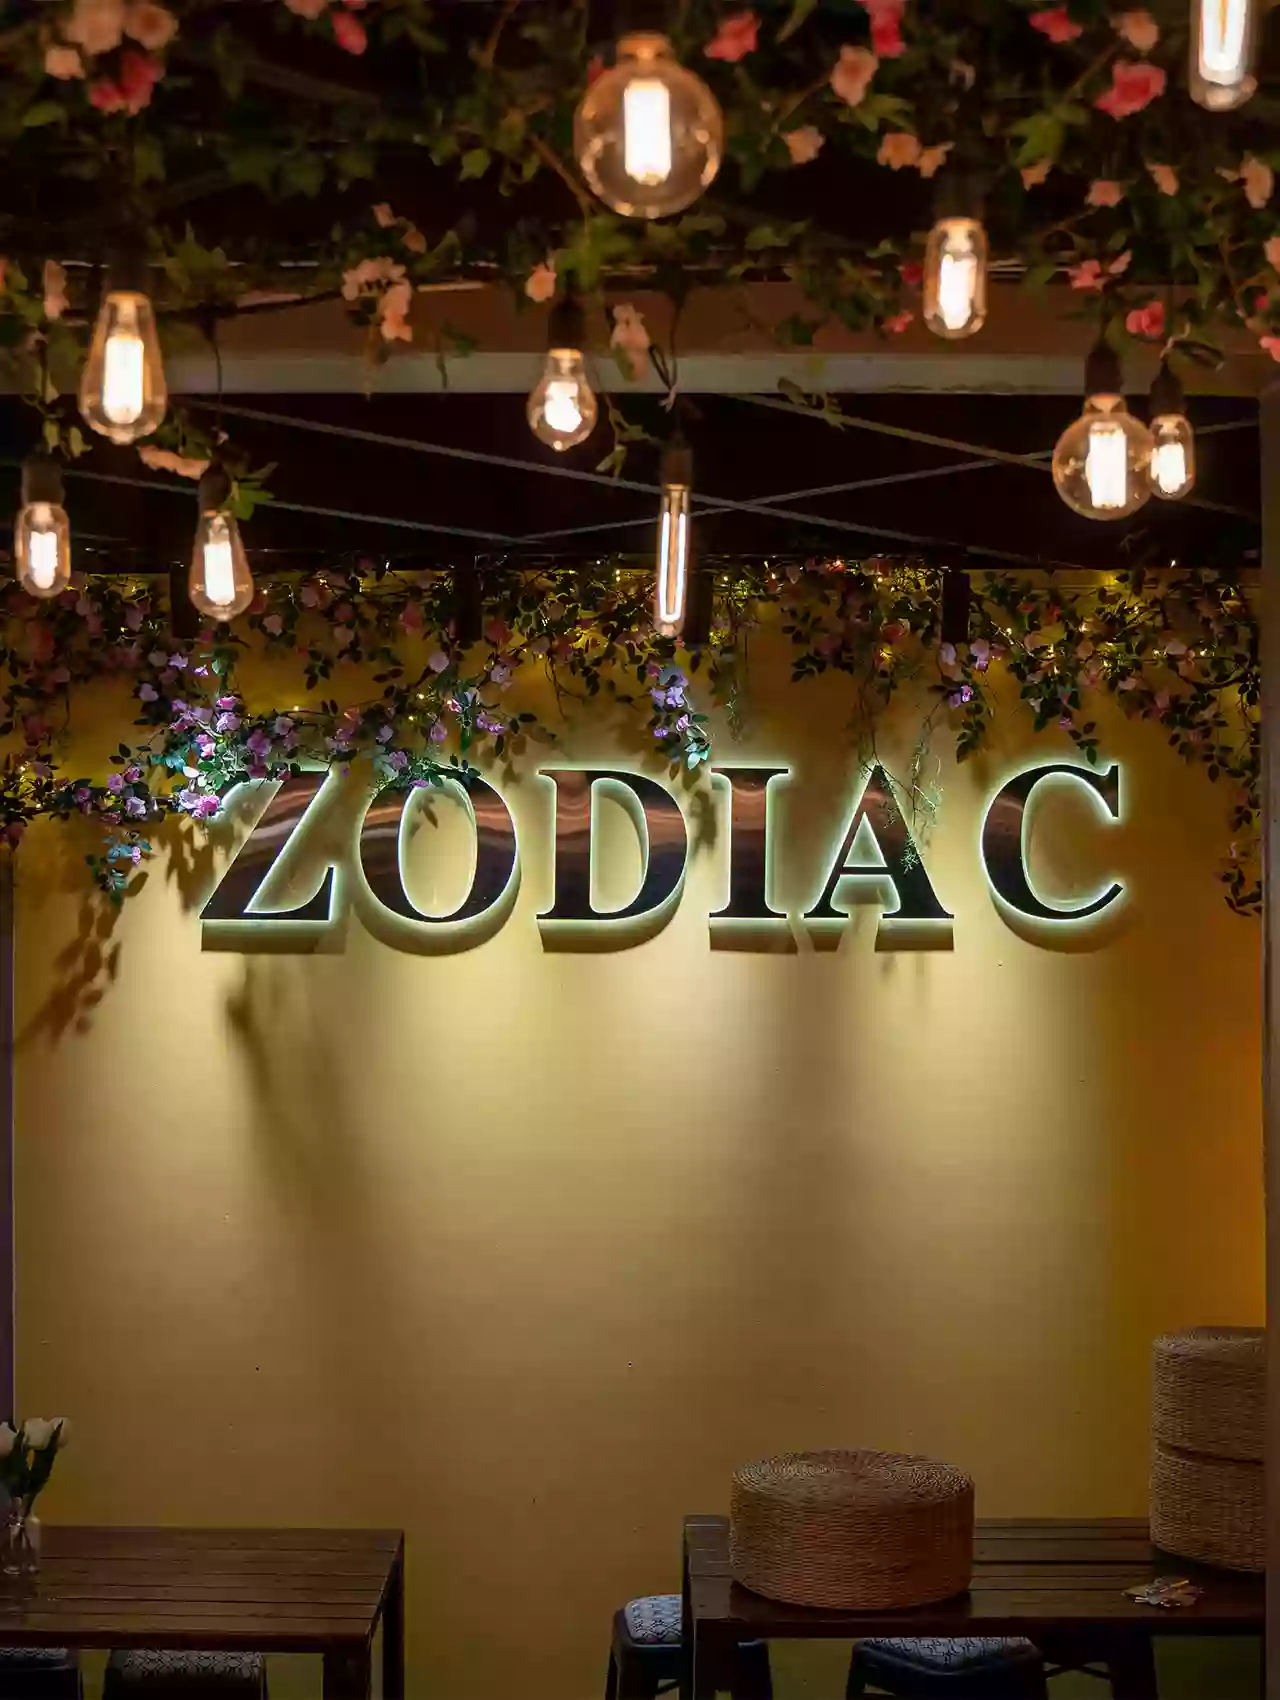 Zodiac Restaurant and Bar